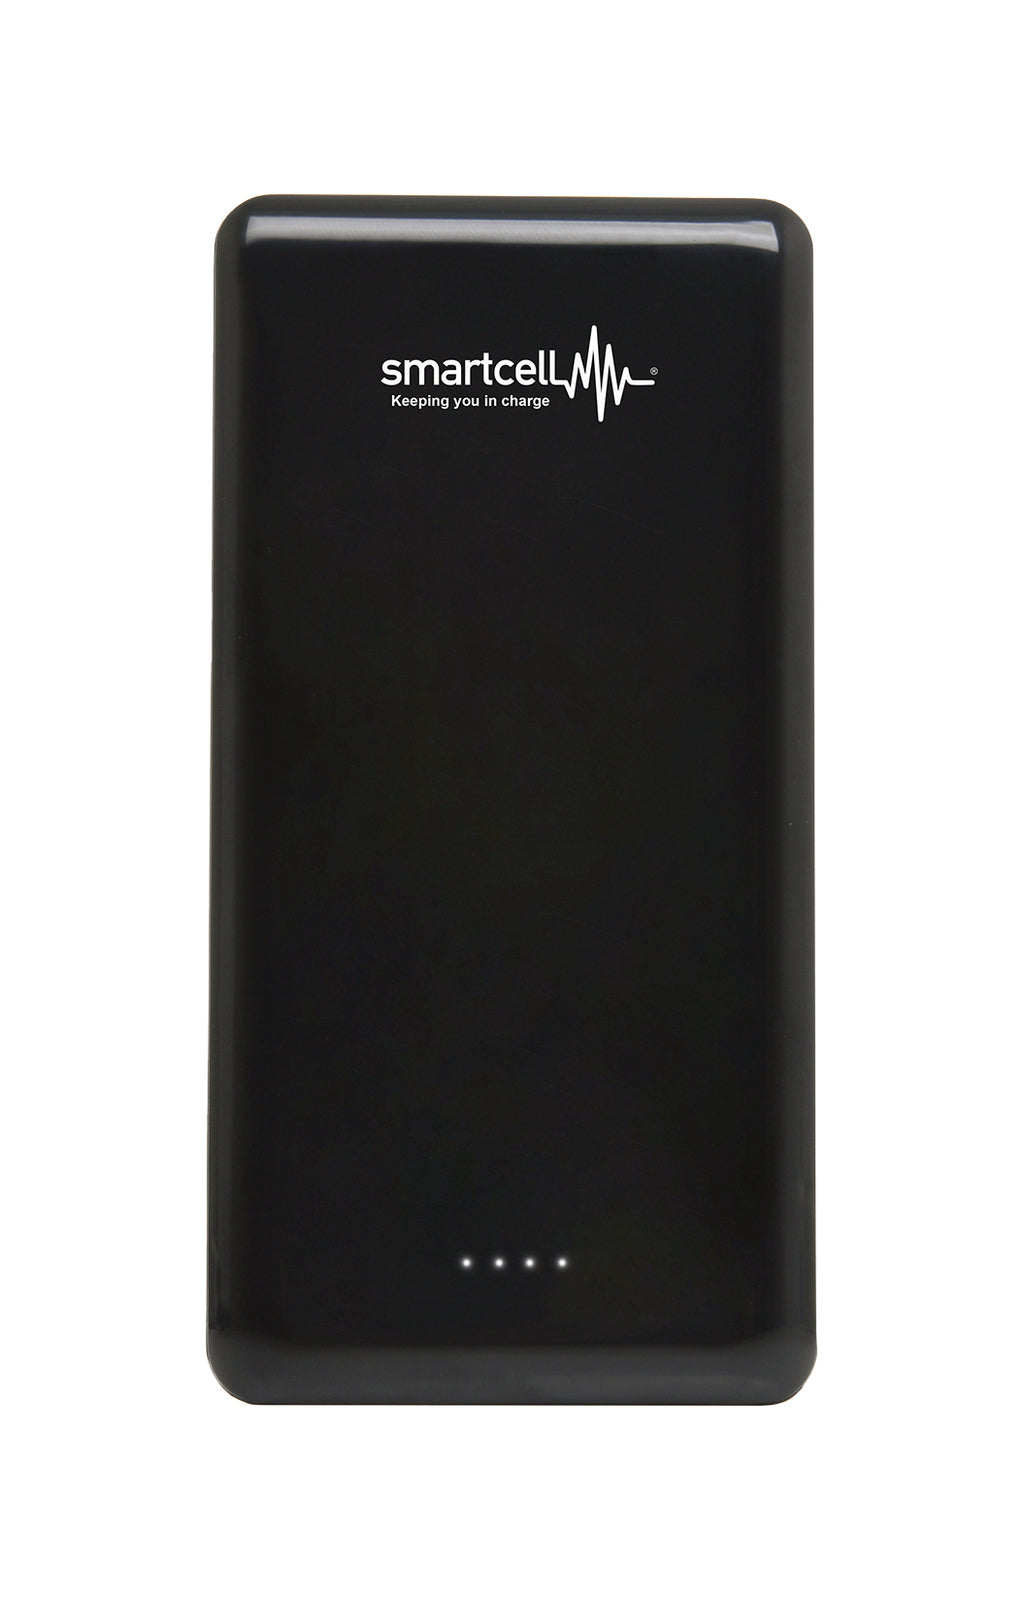 Smartcell 10,000mAh Power Bank